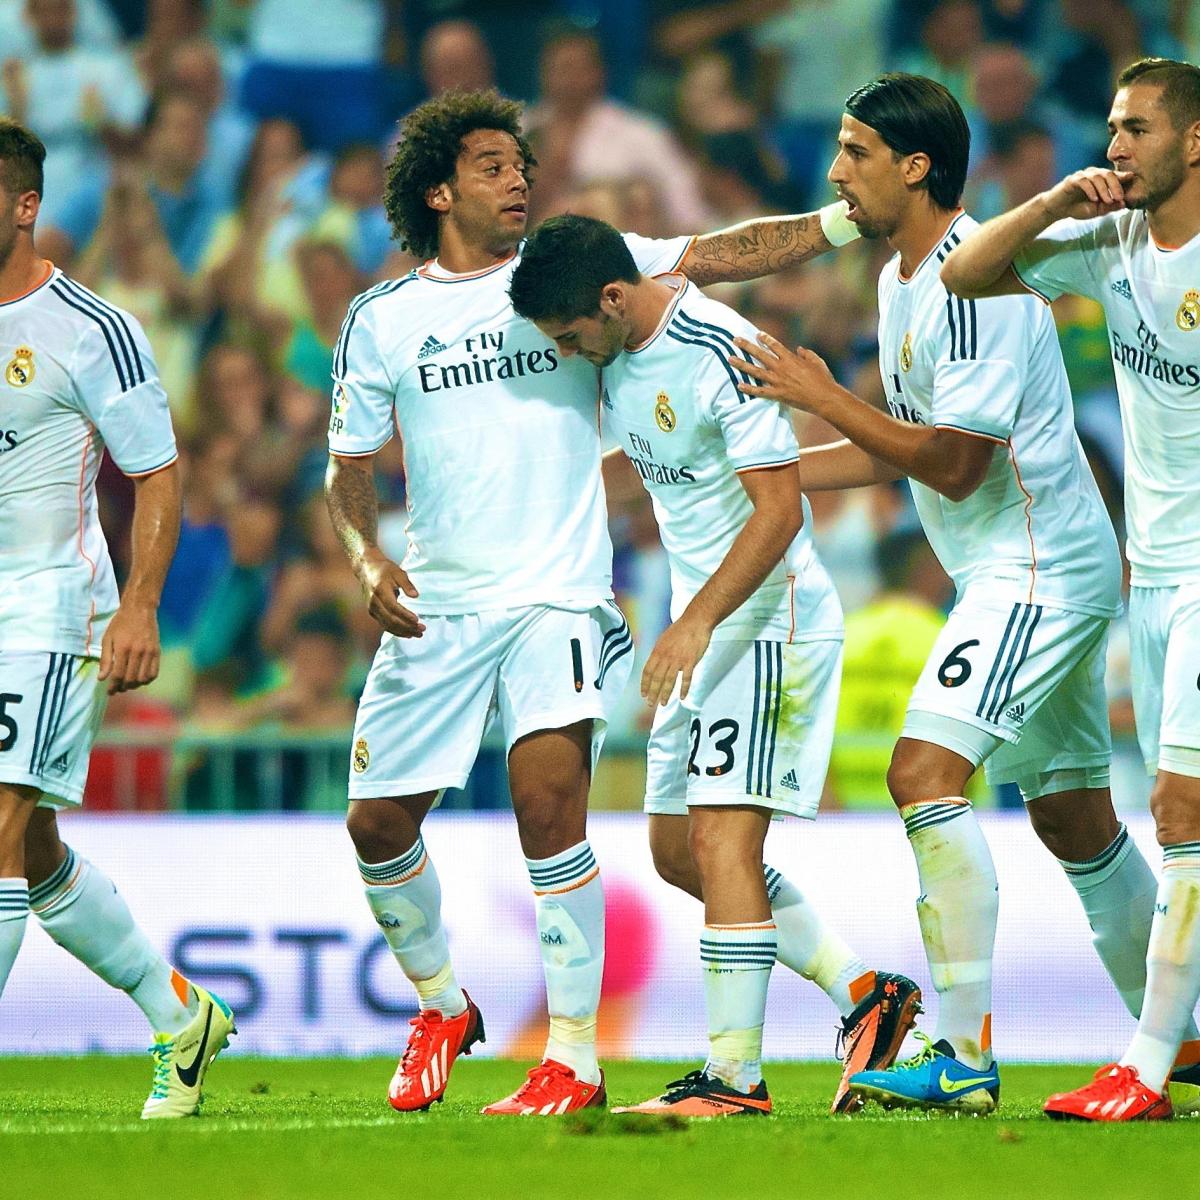 Real Madrid vs. Real Betis: La Liga Live Score, Highlights and Recap